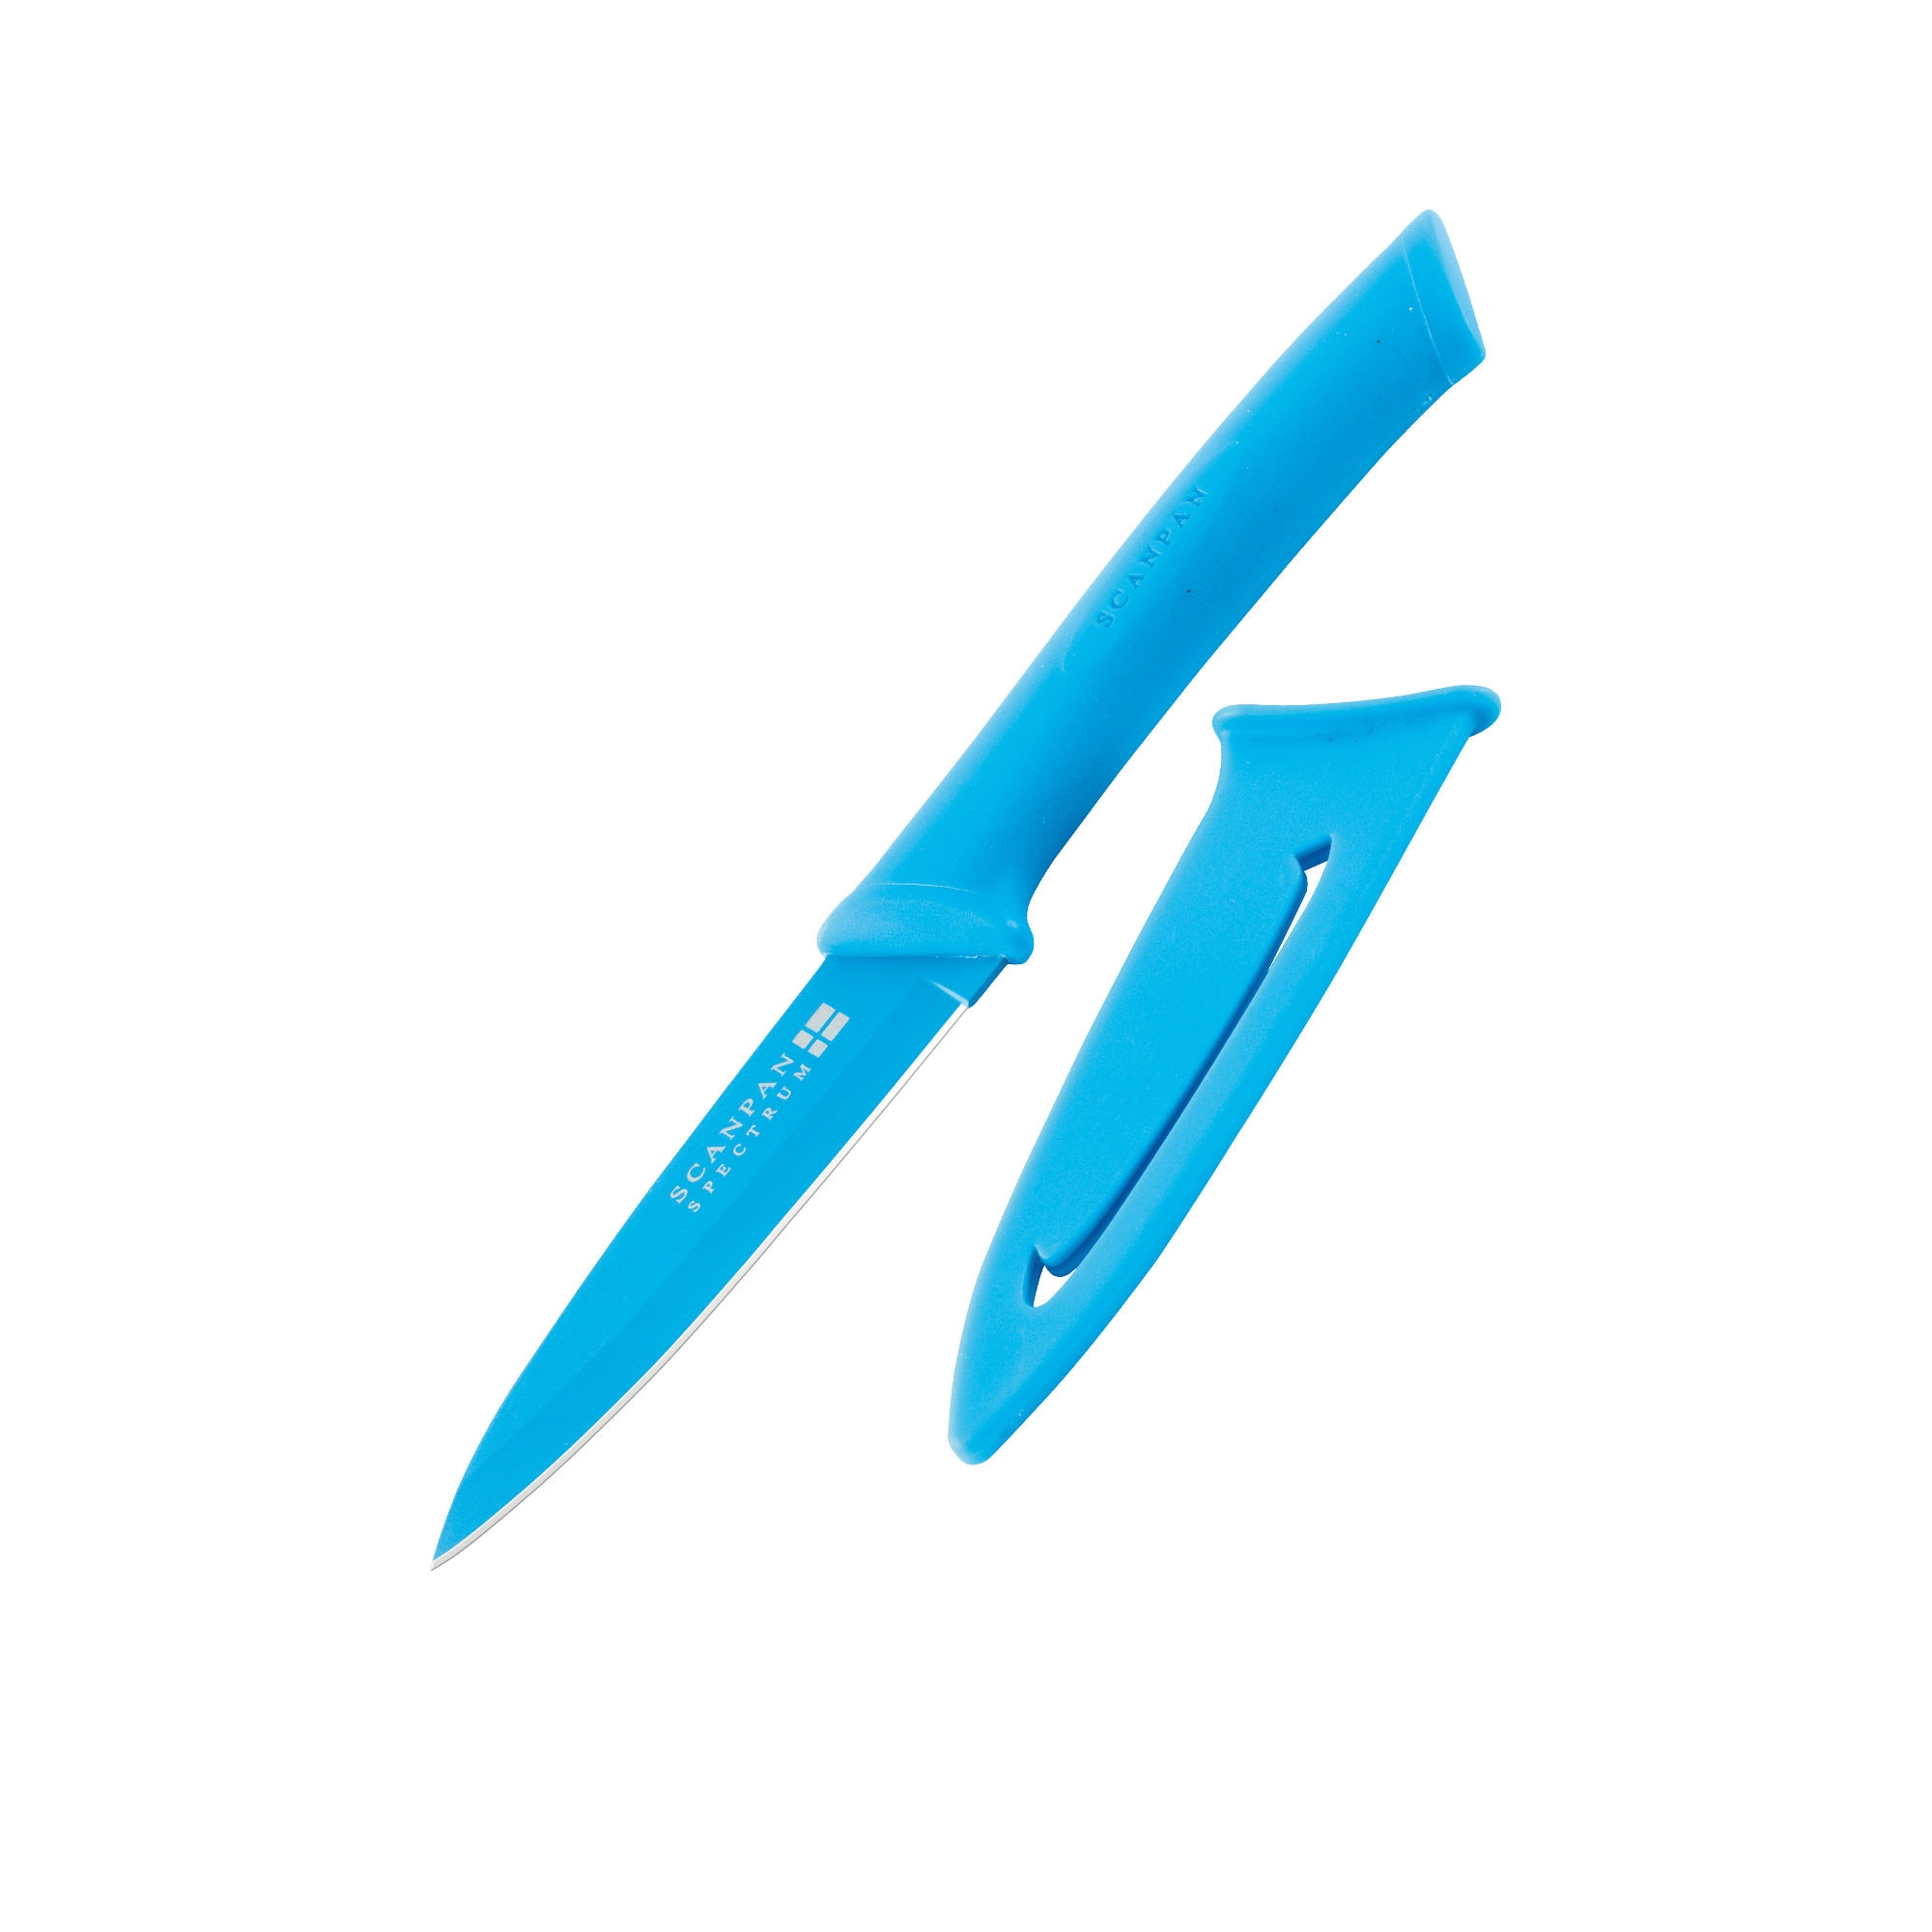 Scanpan Spectrum Soft Touch Utility Knife 9.5cm Blue Image 1